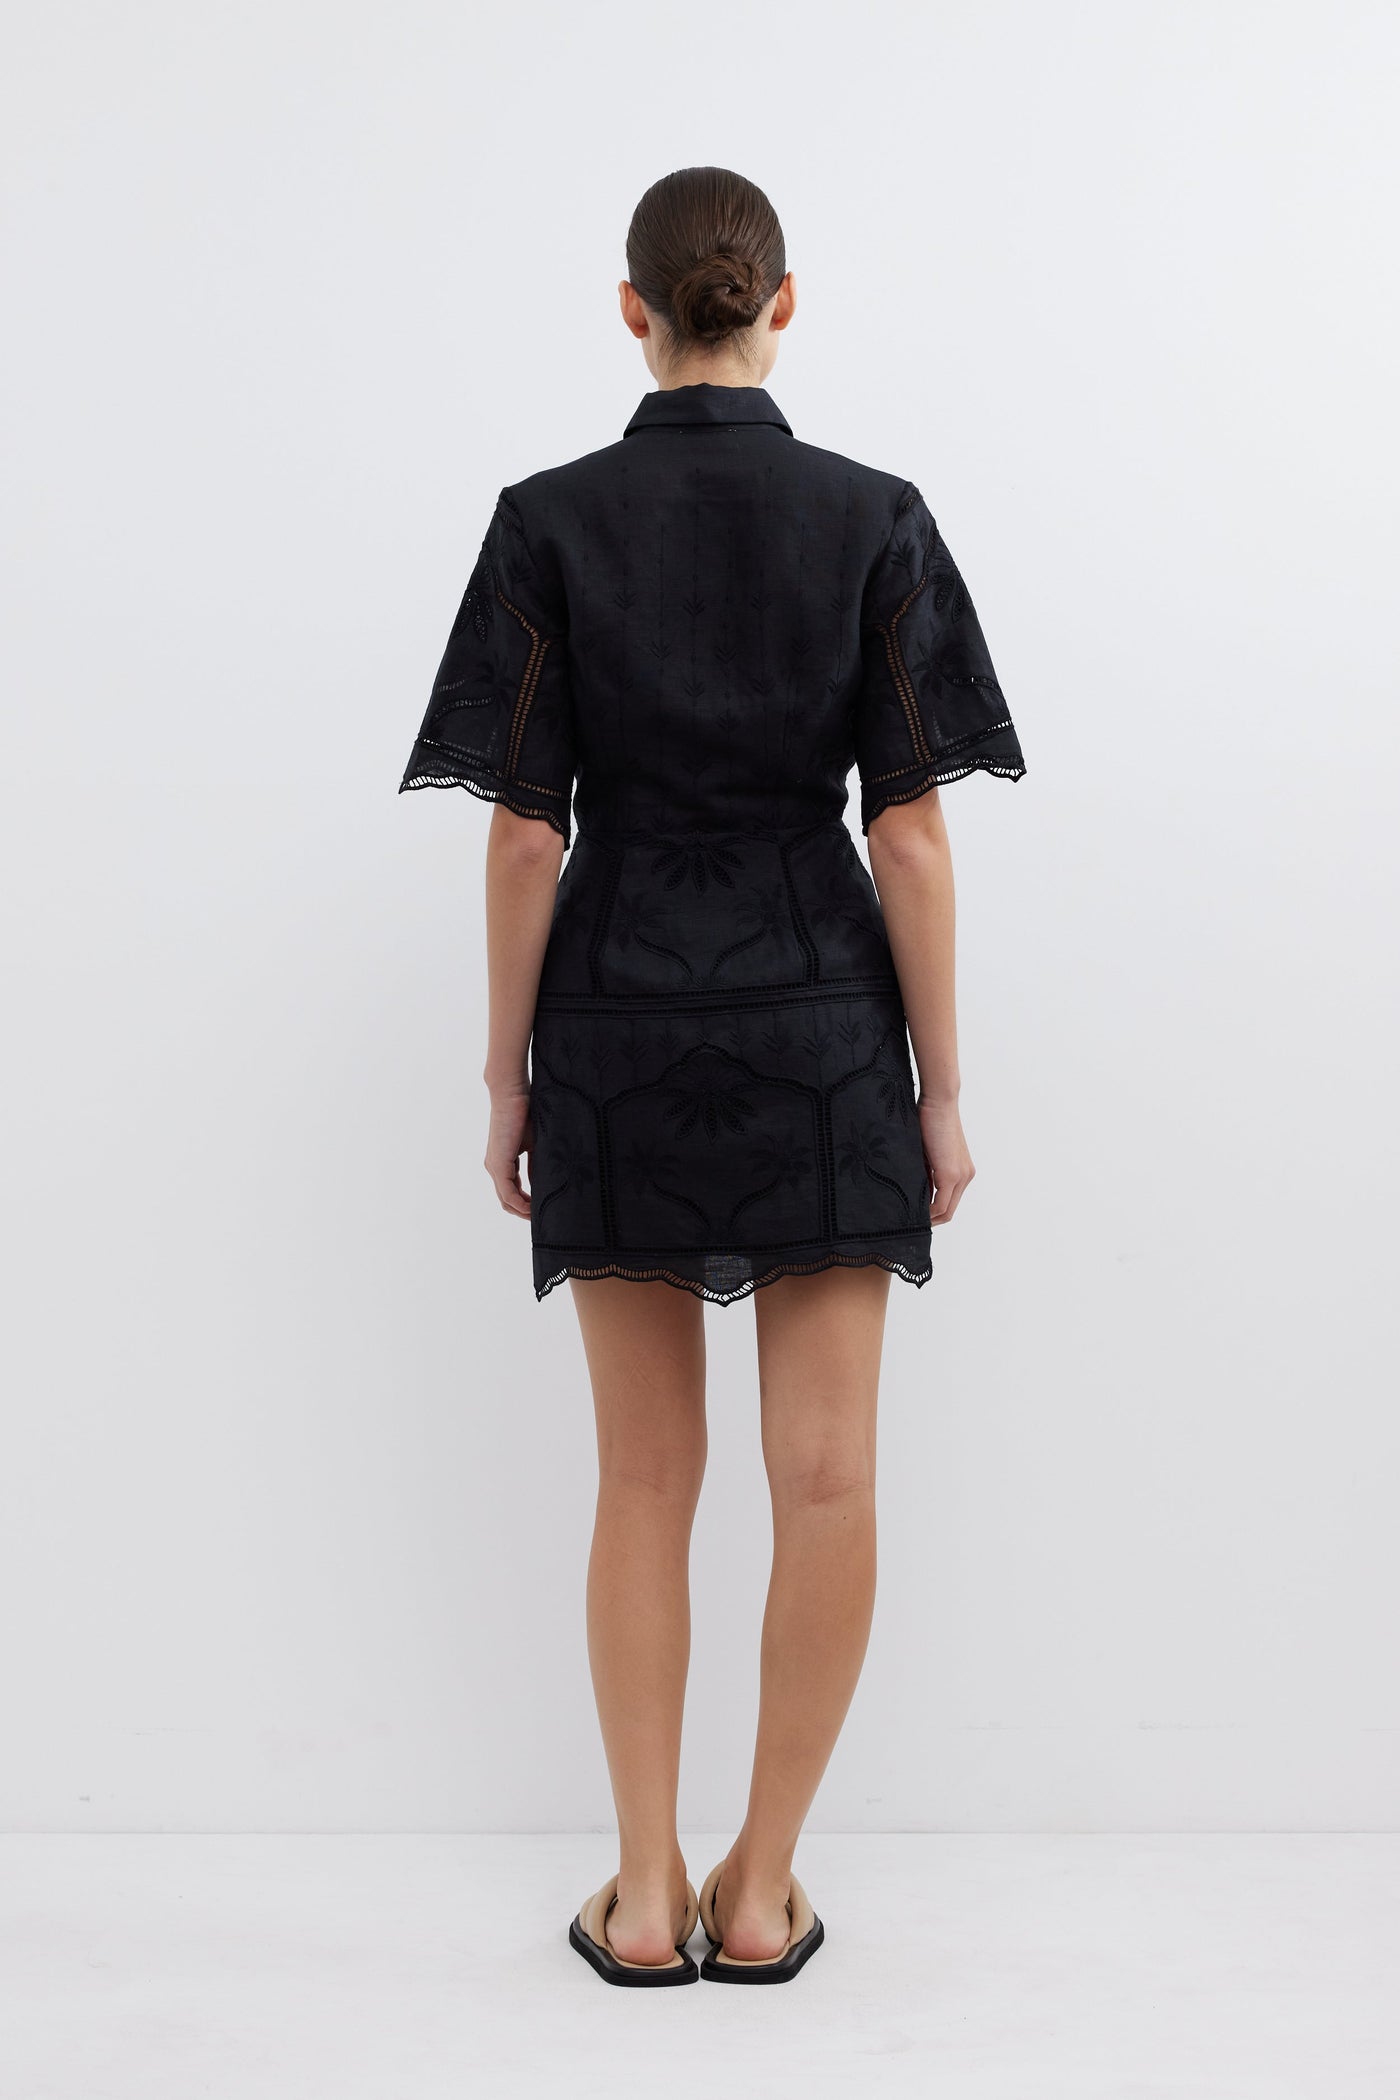 BONITA SHIRT DRESS - BLACK